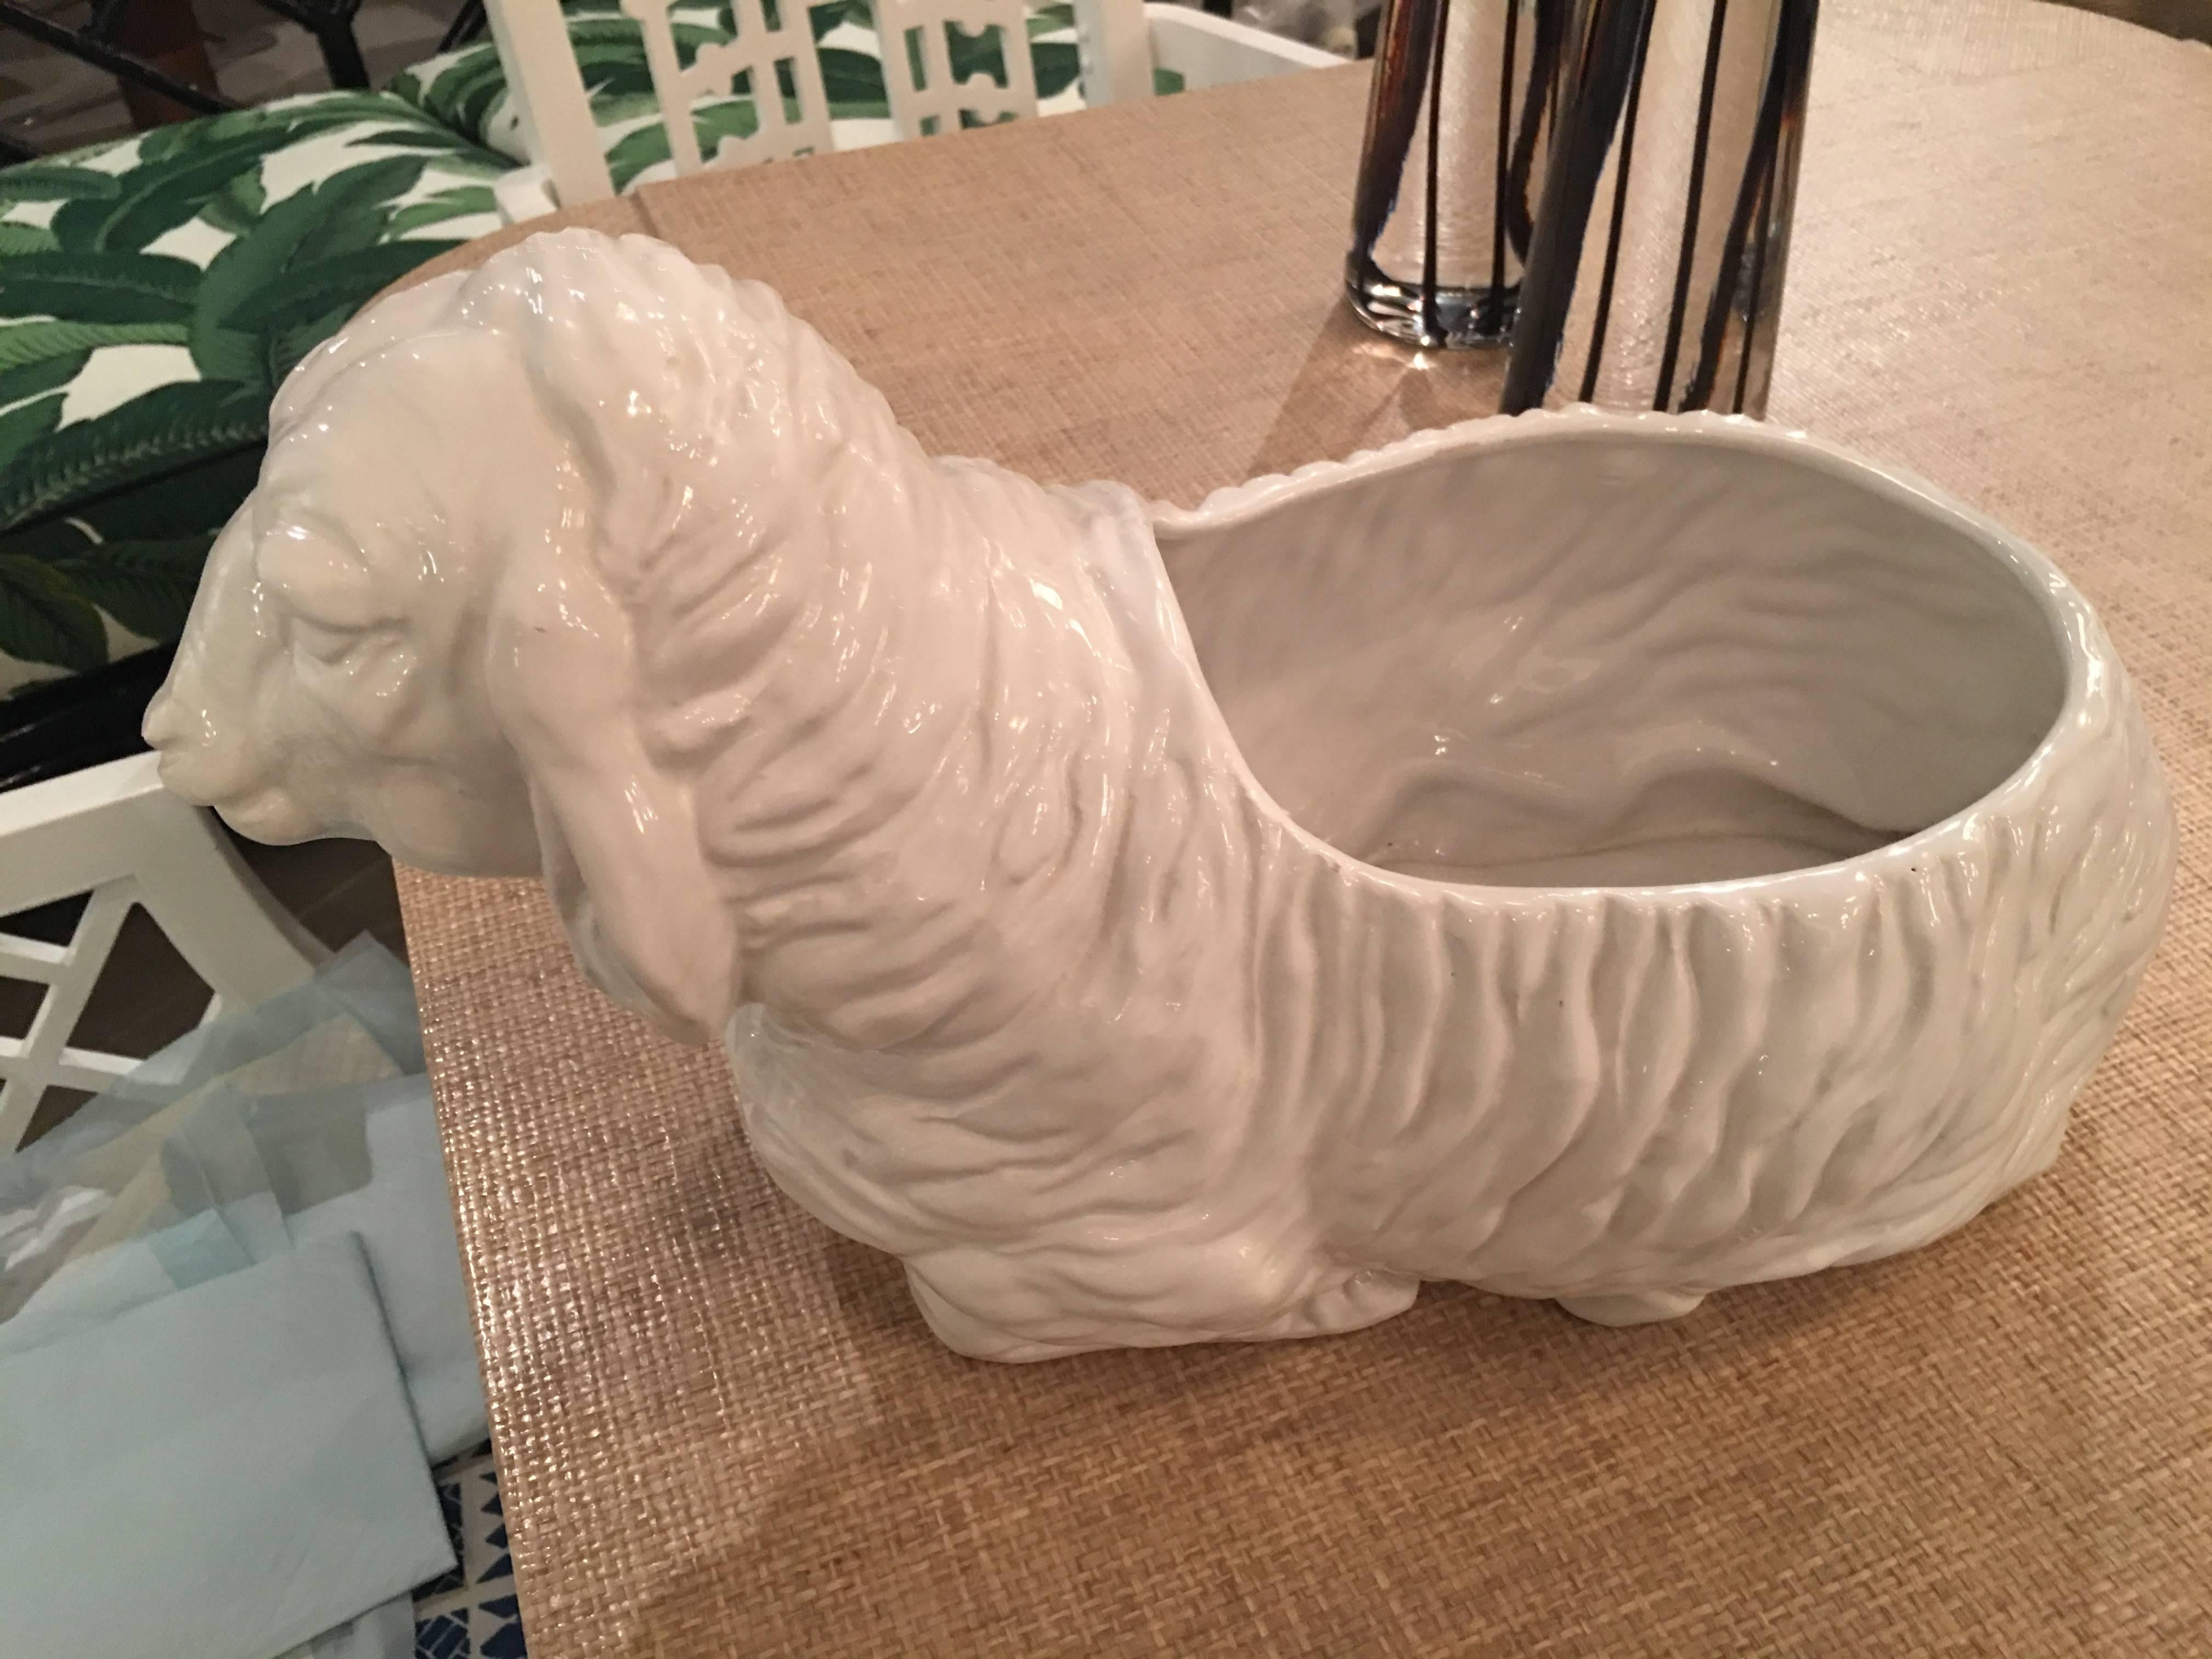 Late 20th Century Italian Sheep Lamp White Ceramic Statue Planter Pot Vintage Hollywood Regency  For Sale